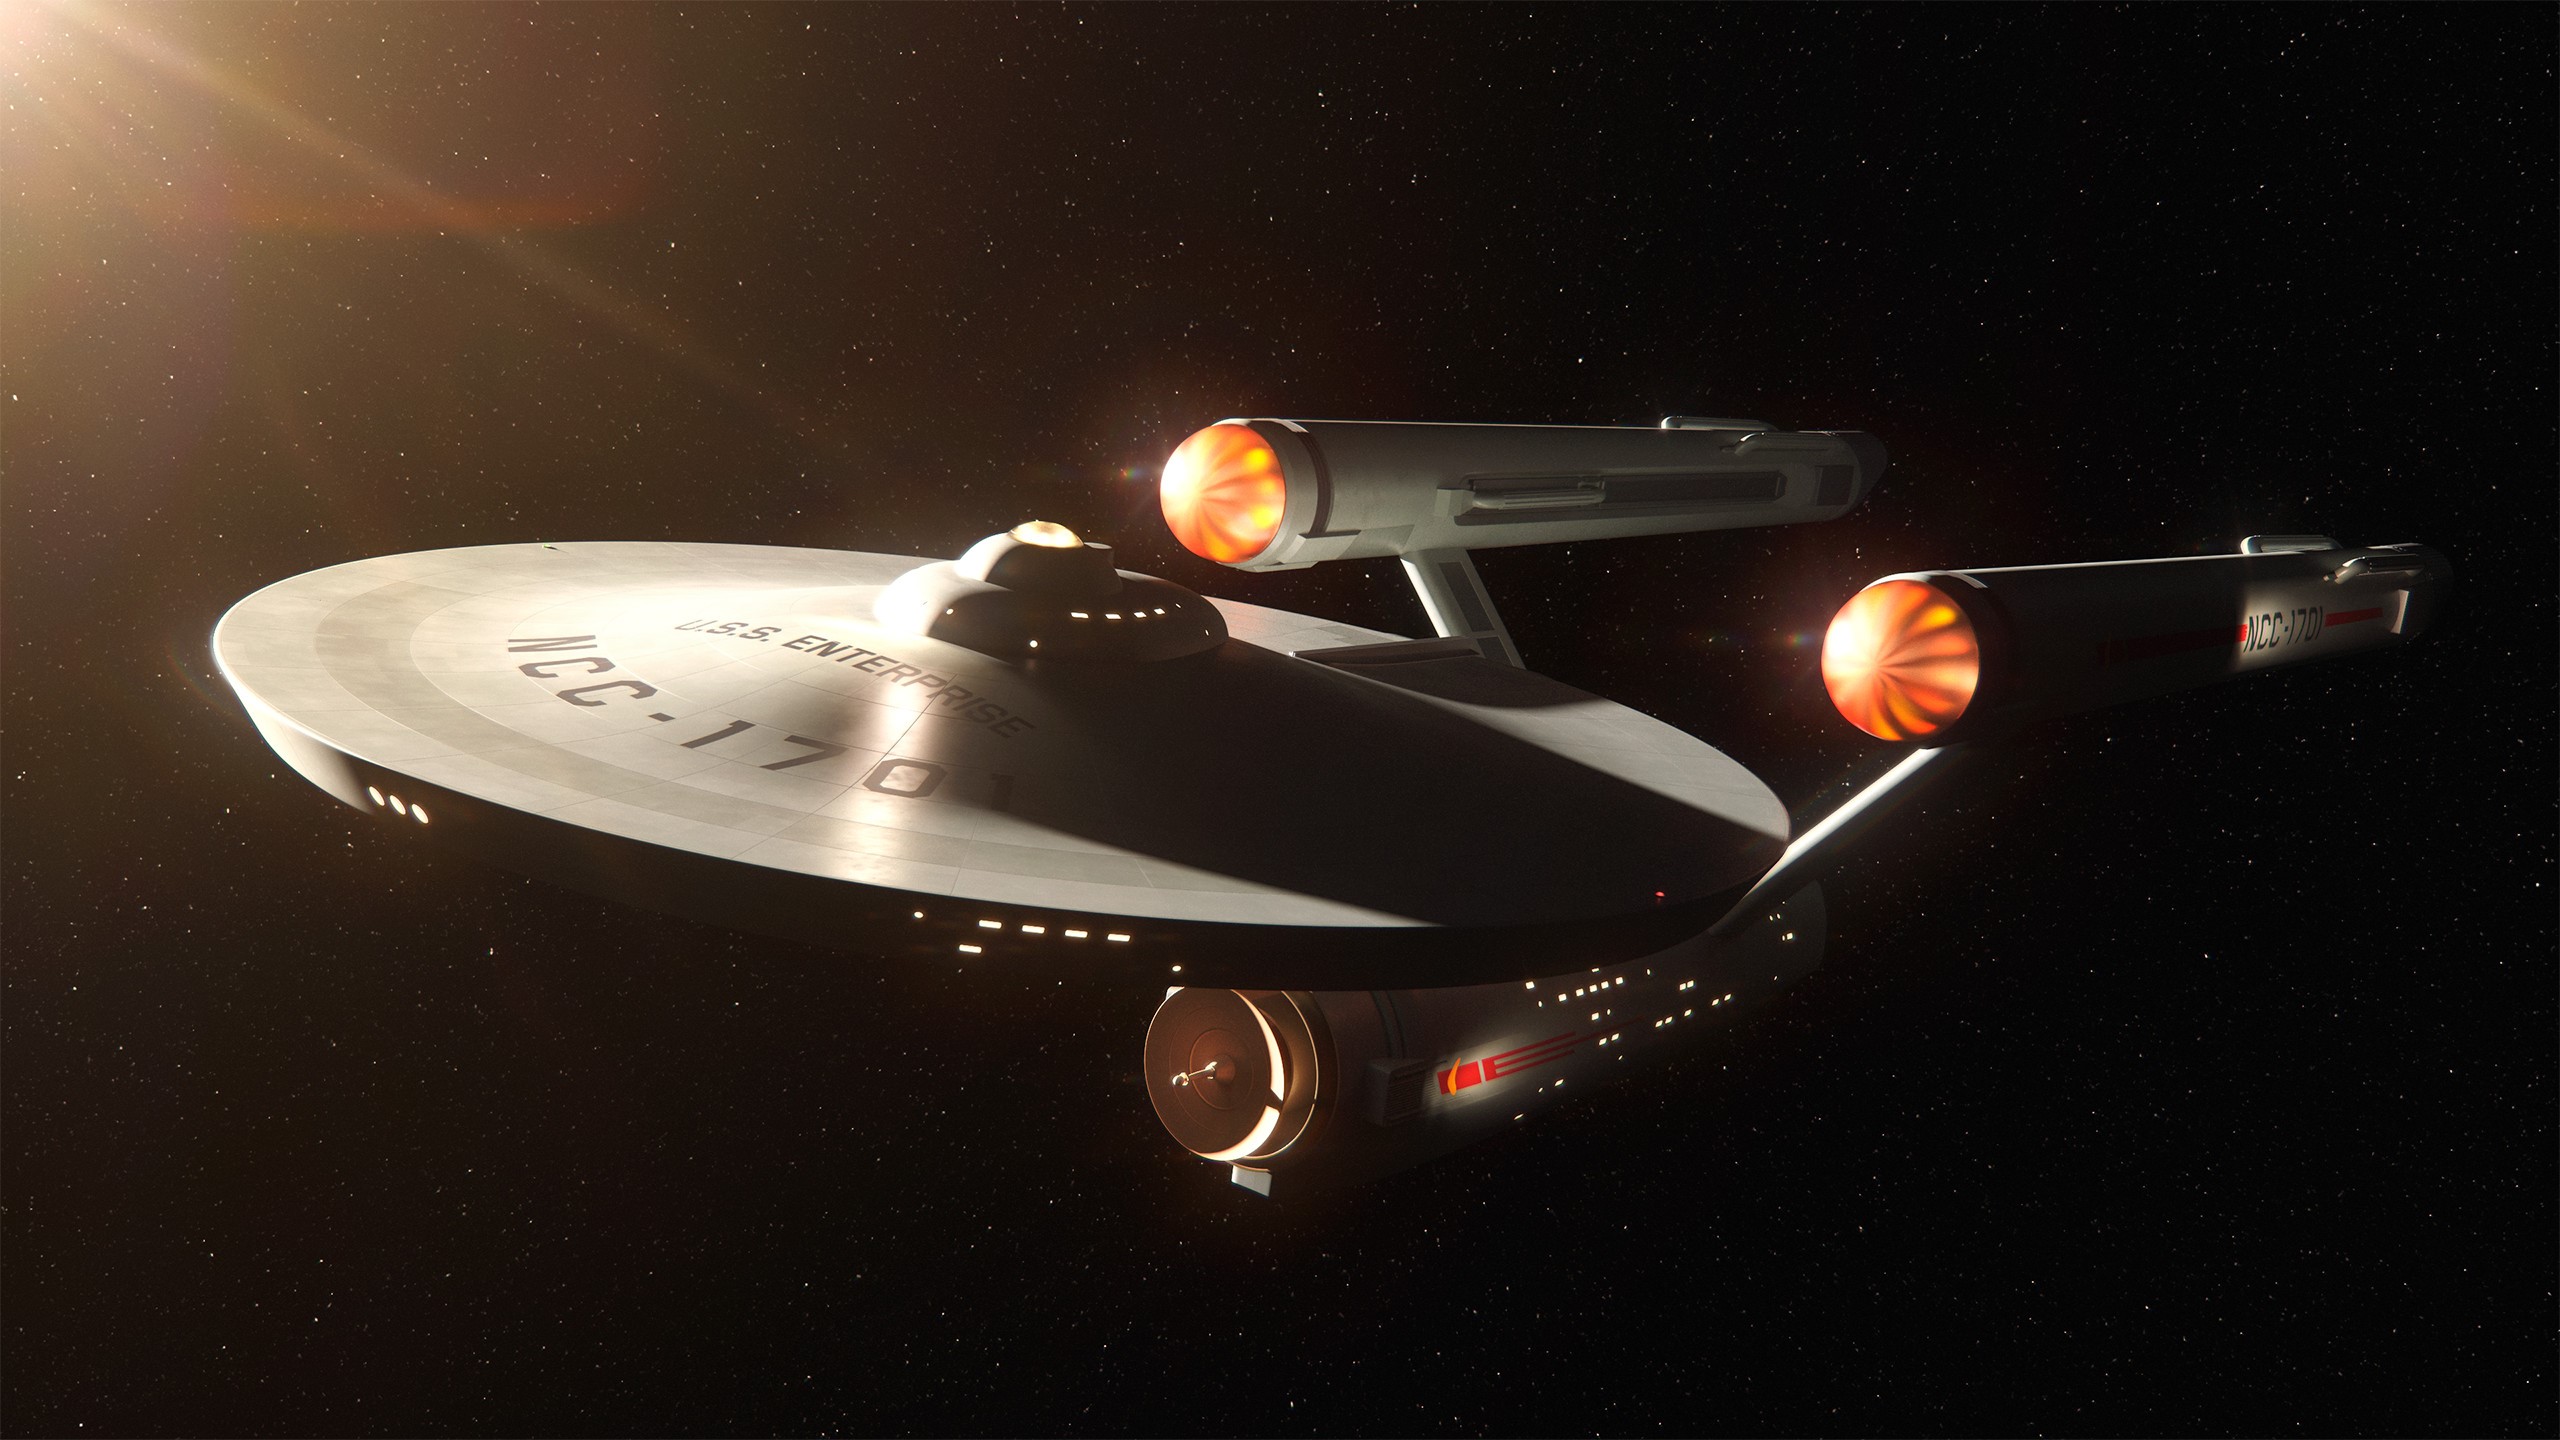 426919-Star-Trek-spaceship-vehicle-science-fiction-CGI.jpg